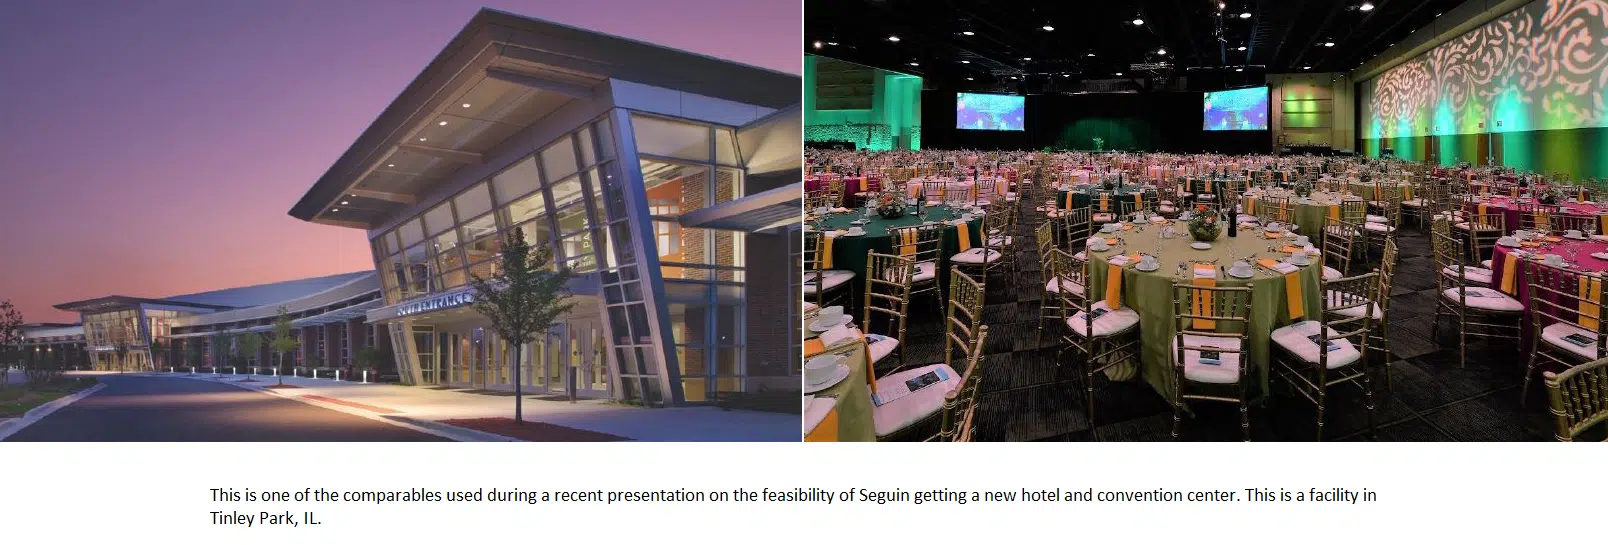 Study suggests Seguin should consider building multi-million dollar hotel, convention center